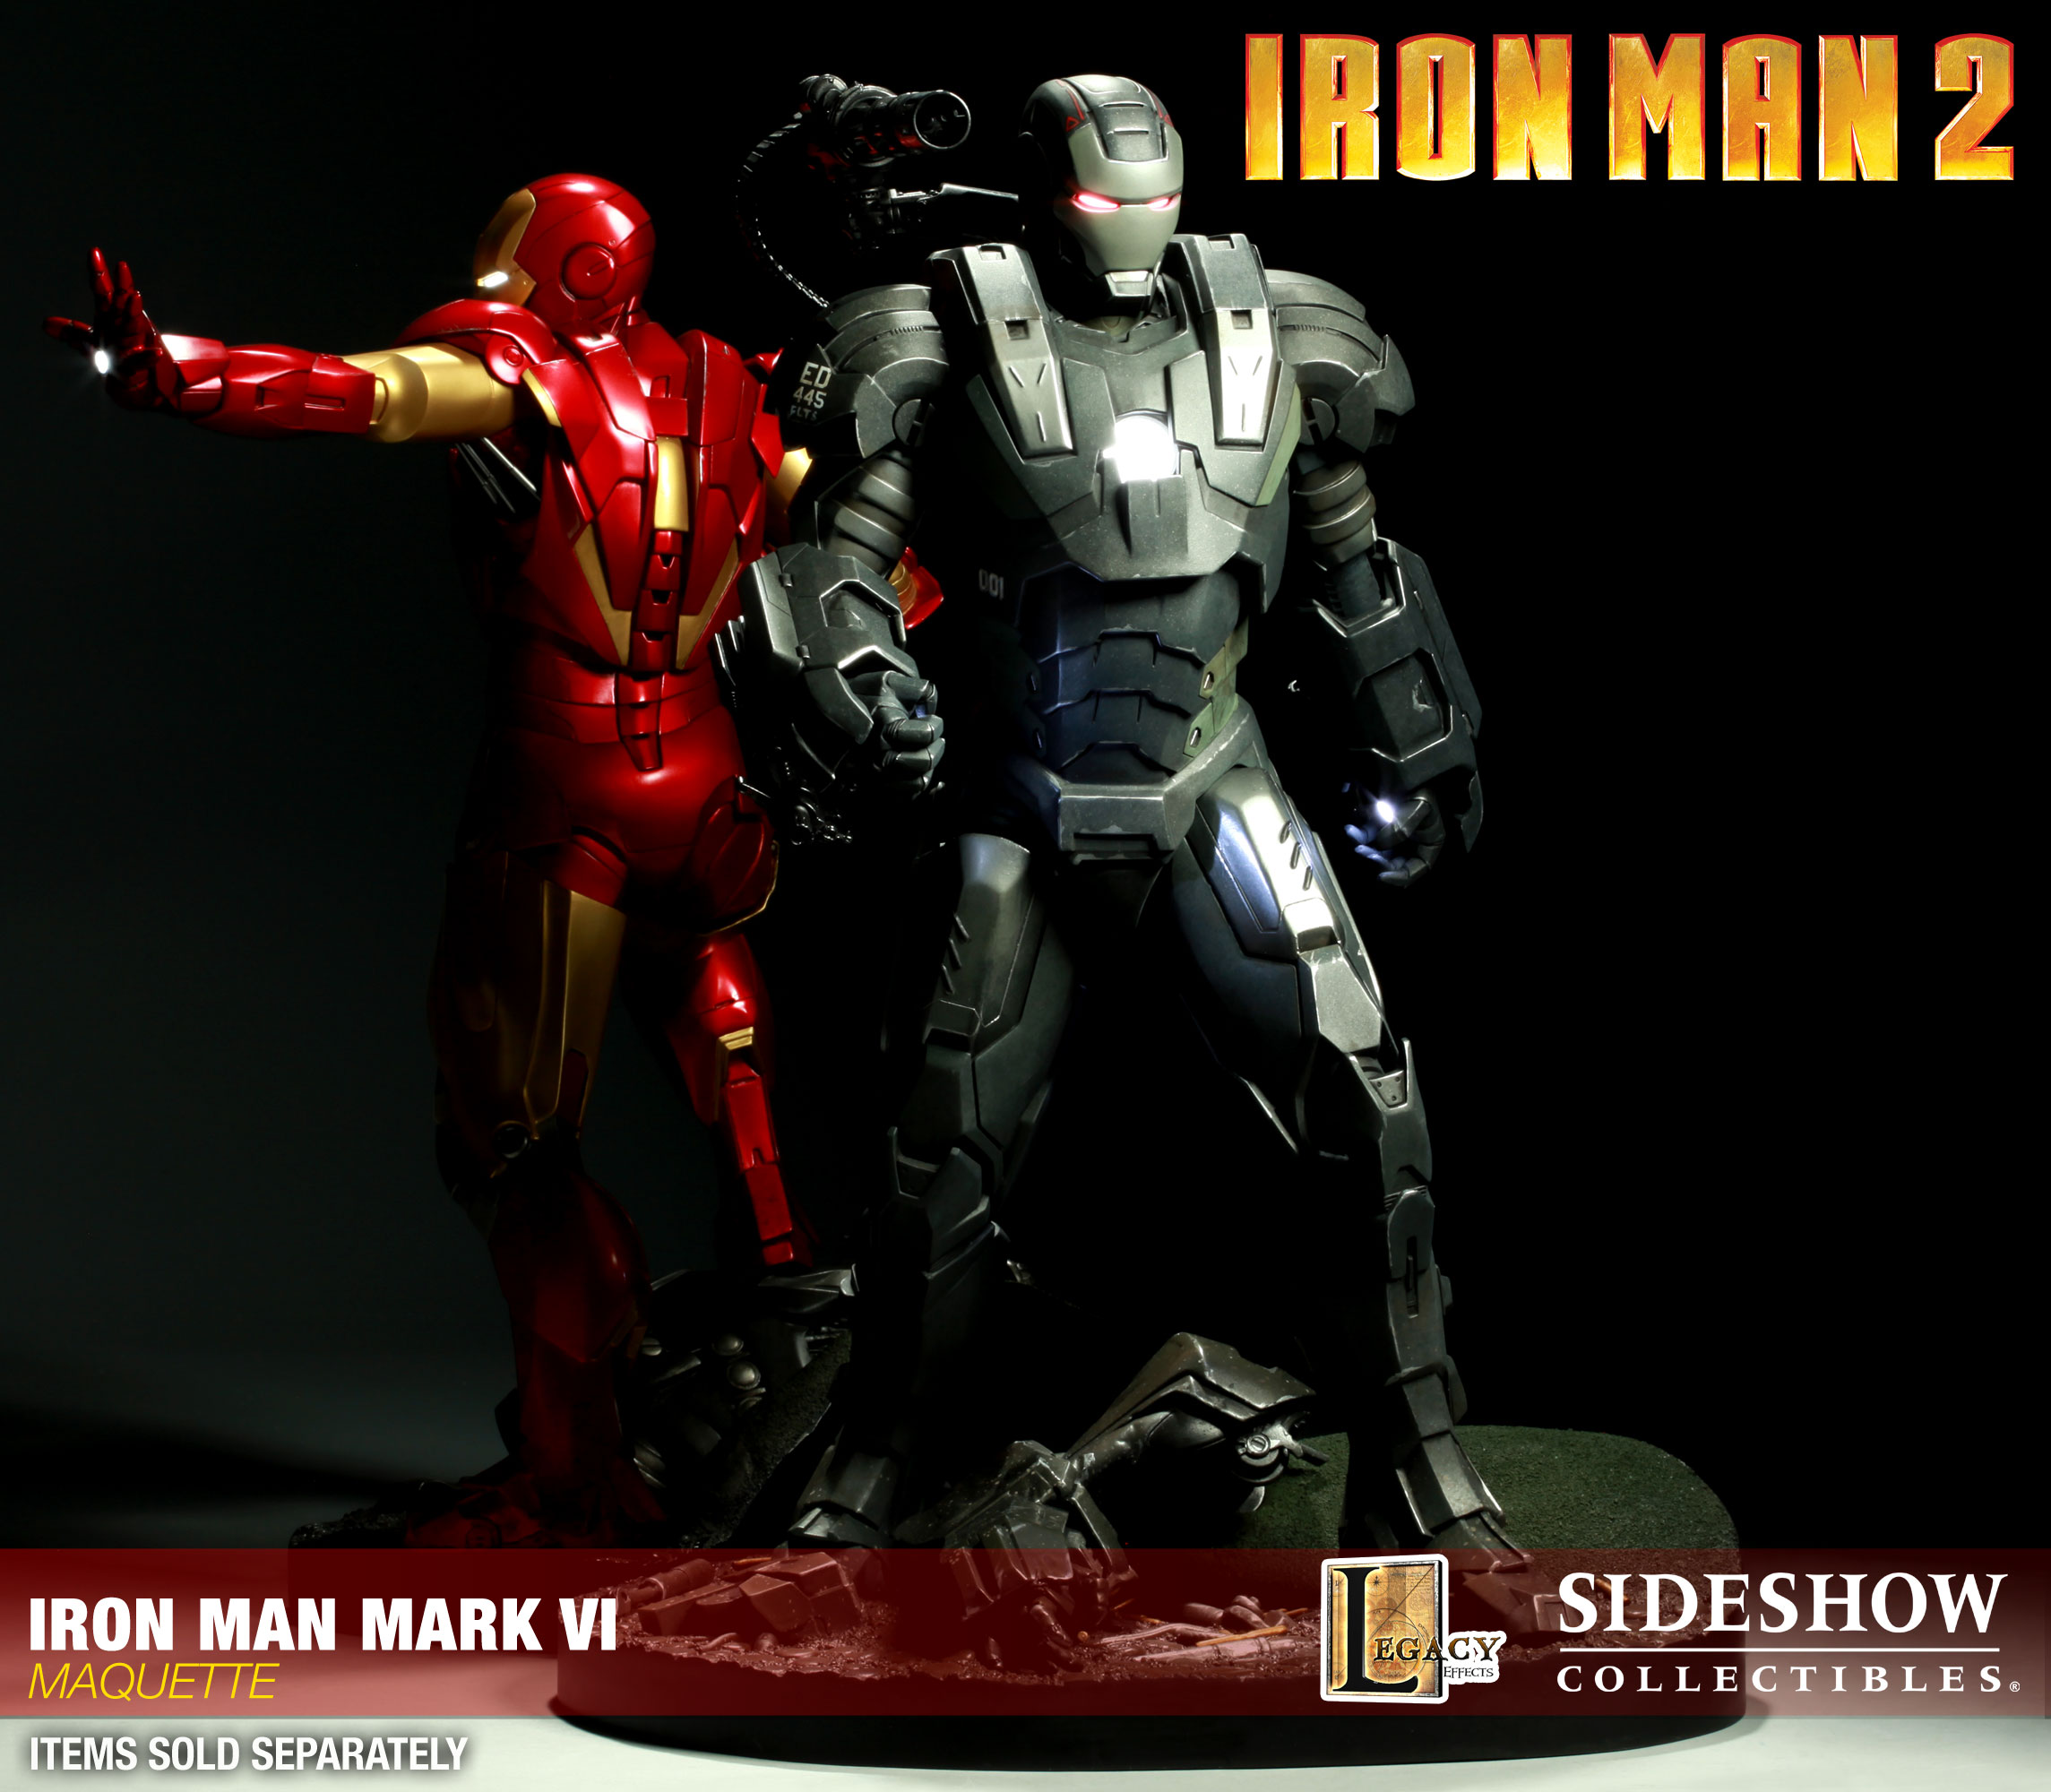 Iron Man Mark VI Exclusive Edition View 8